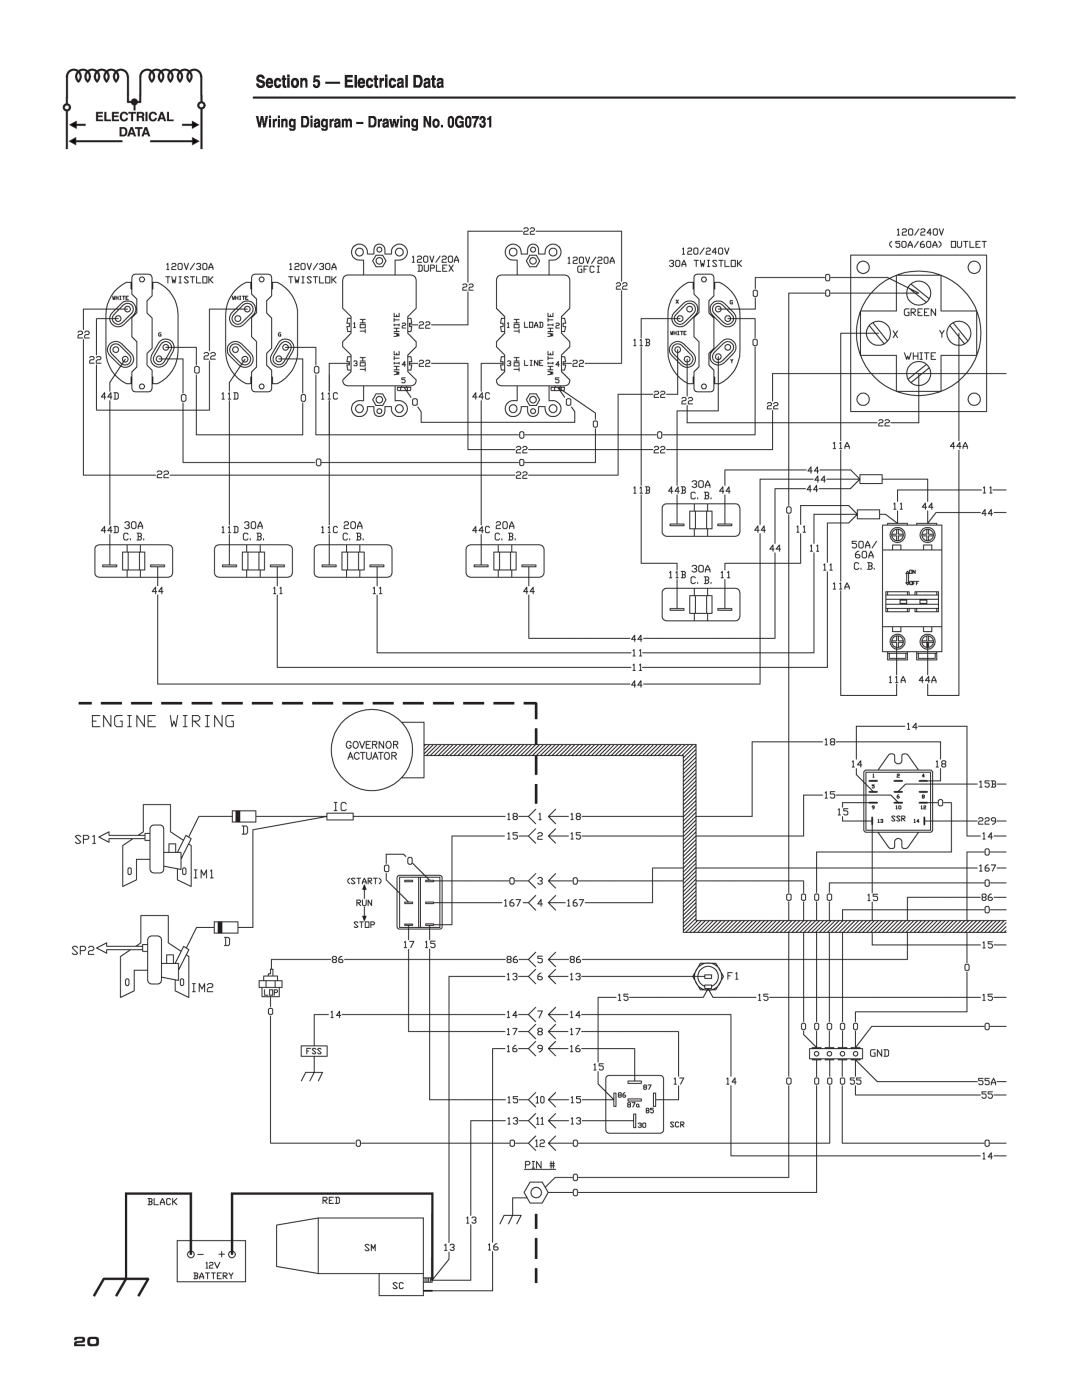 Guardian Technologies 004582-2 owner manual Electrical Data, Wiring Diagram – Drawing No. 0G0731 